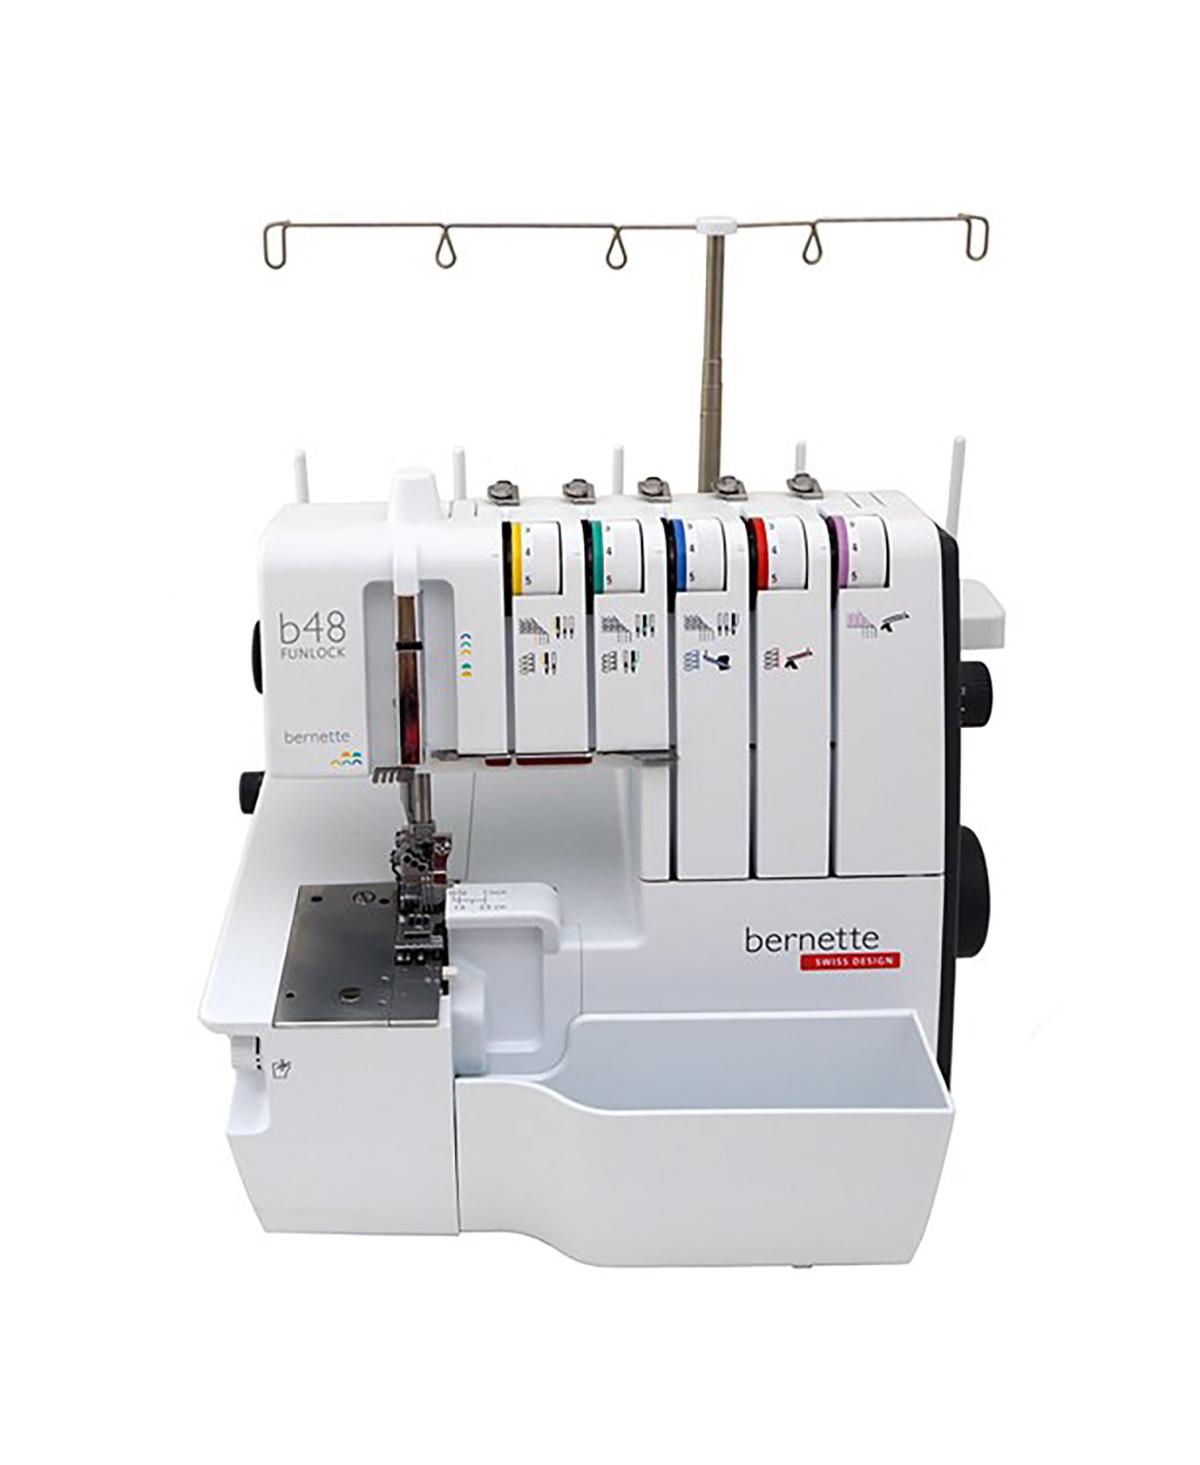 b48 Swiss Design Funlock Overlocker Coverstitch Serger Sewing Machine - White